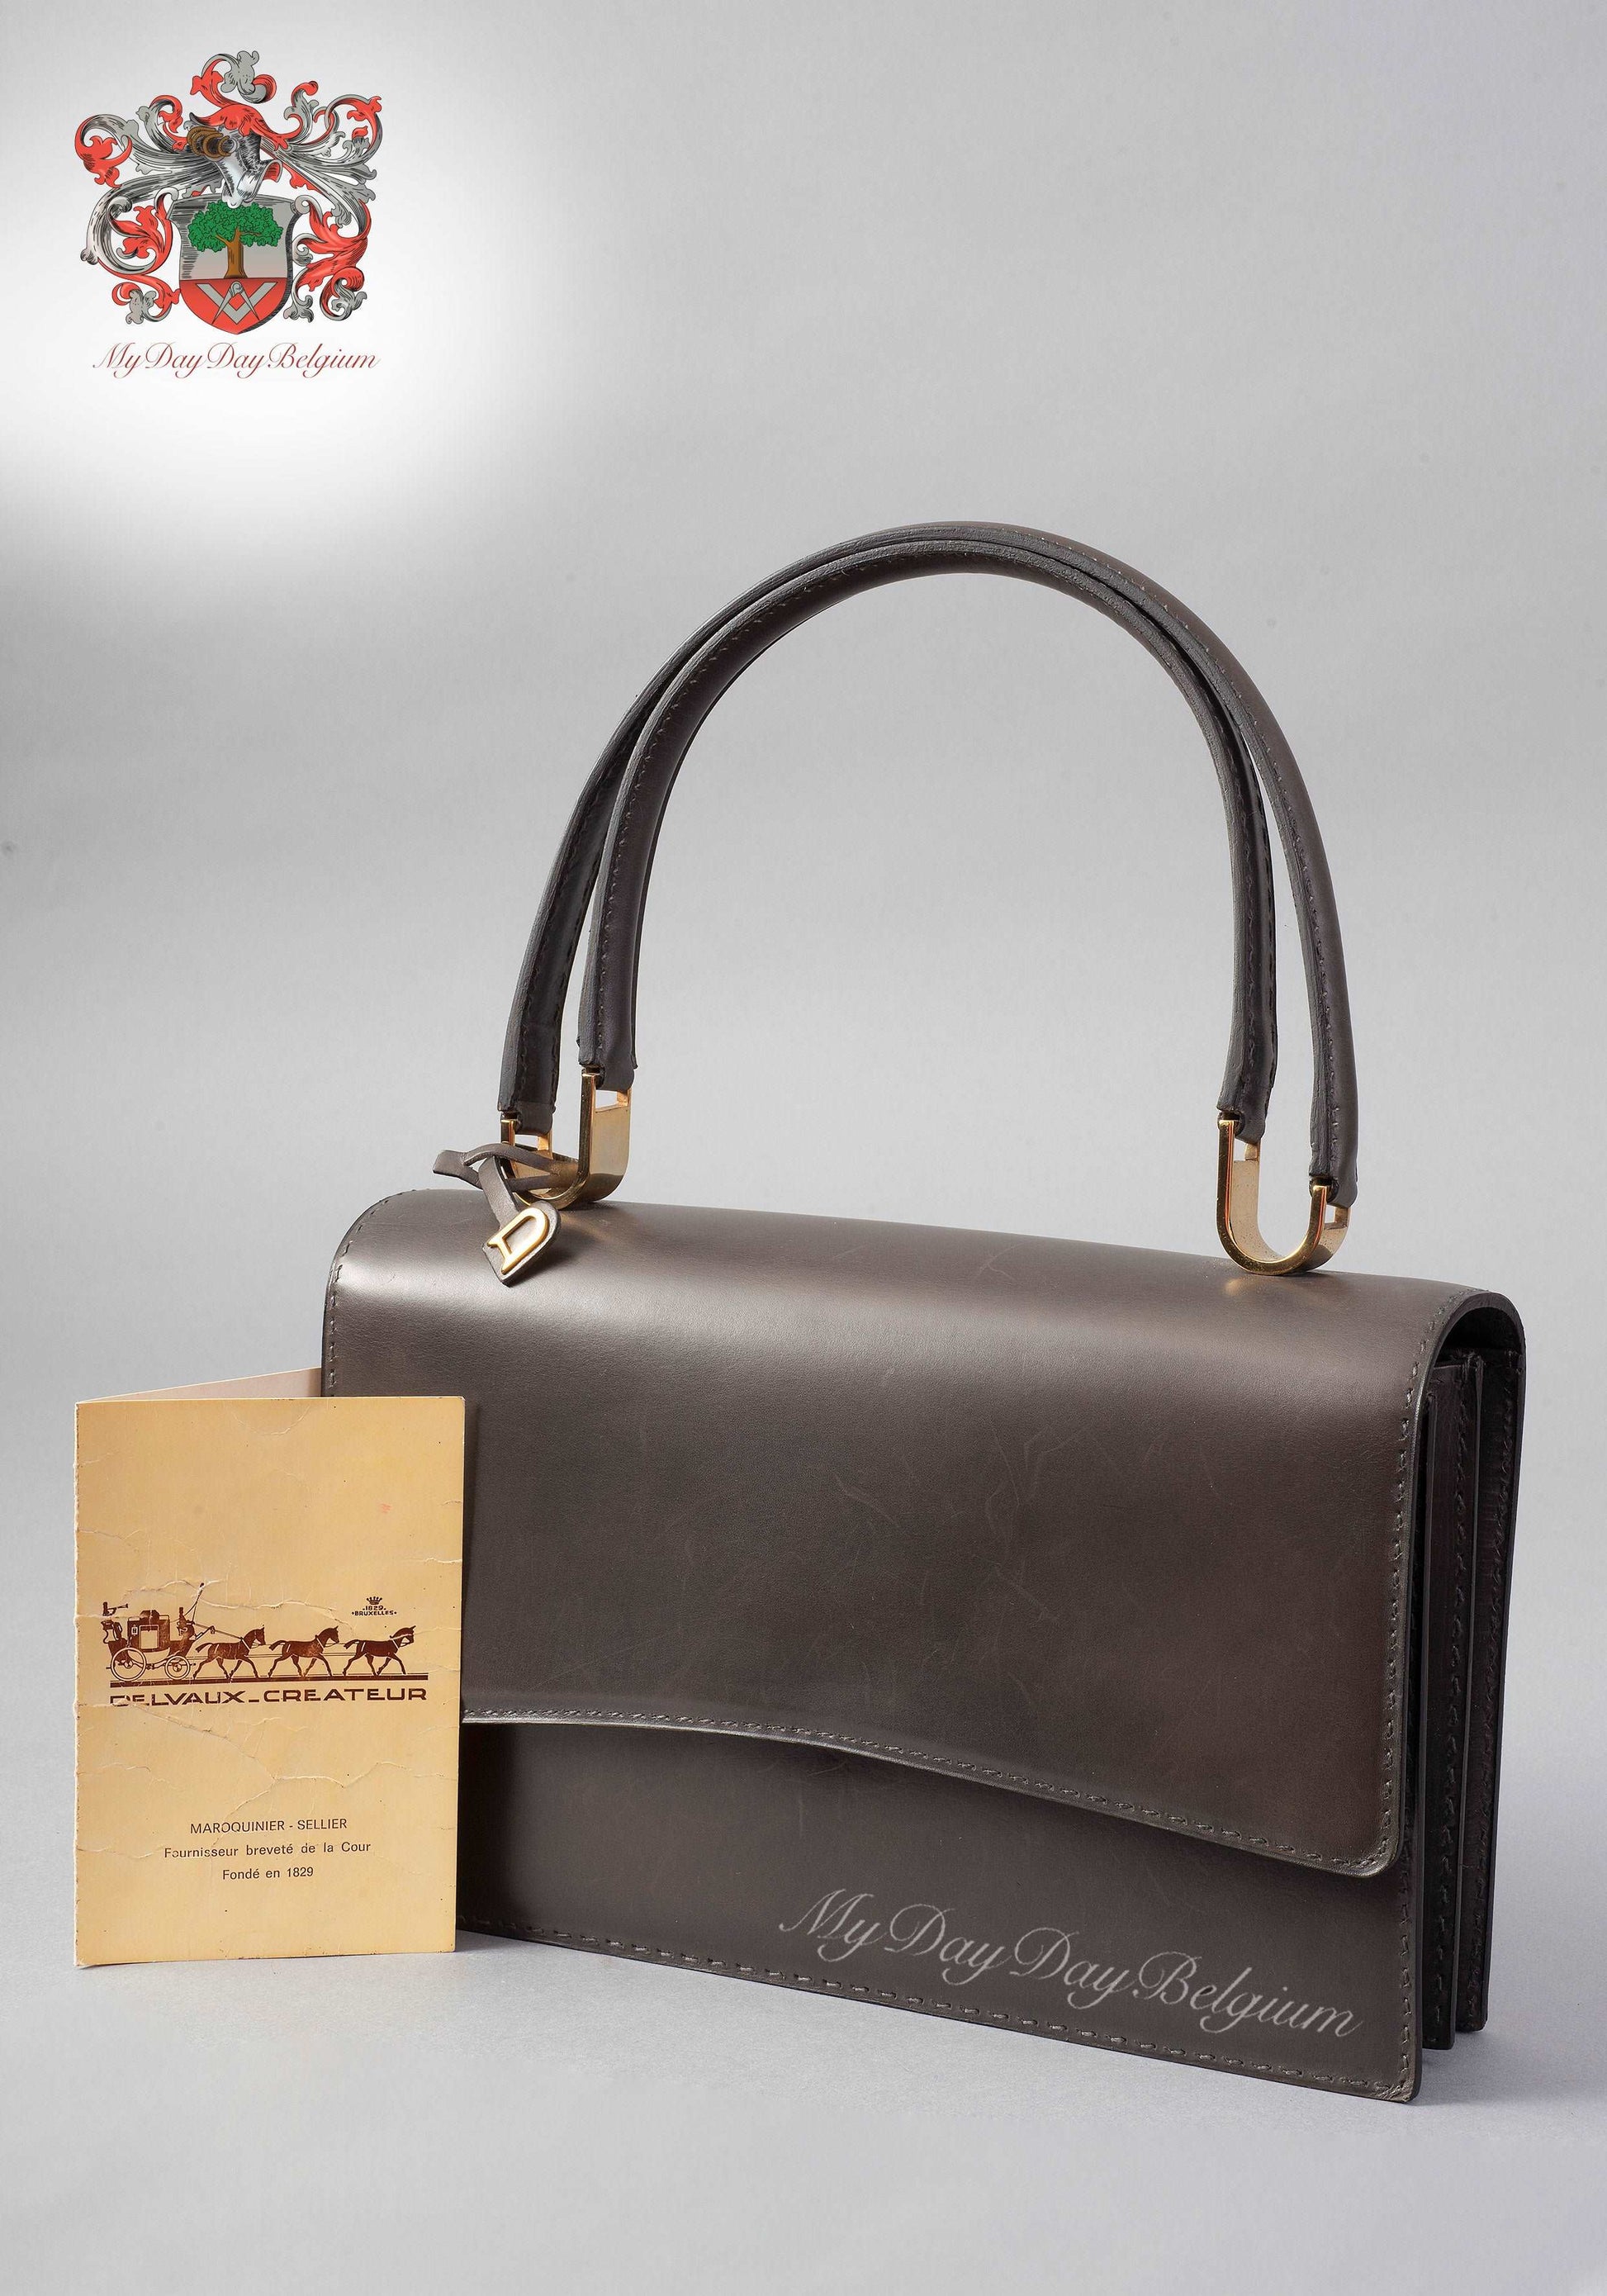 Delvaux top handle bag 1969